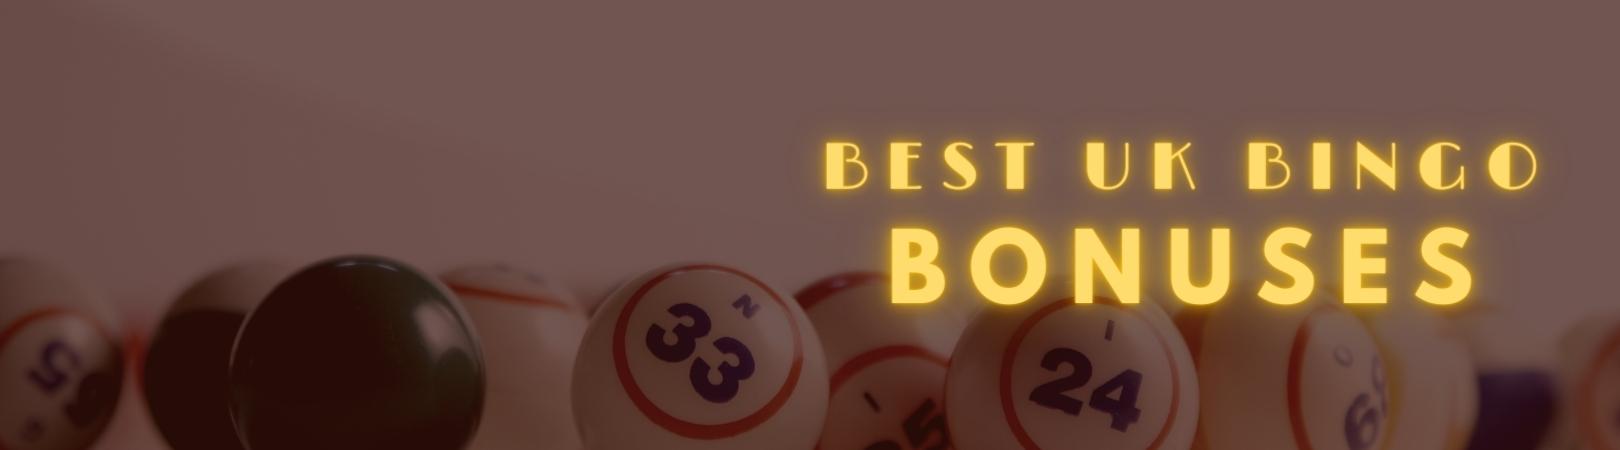 Best UK bingo bonuses